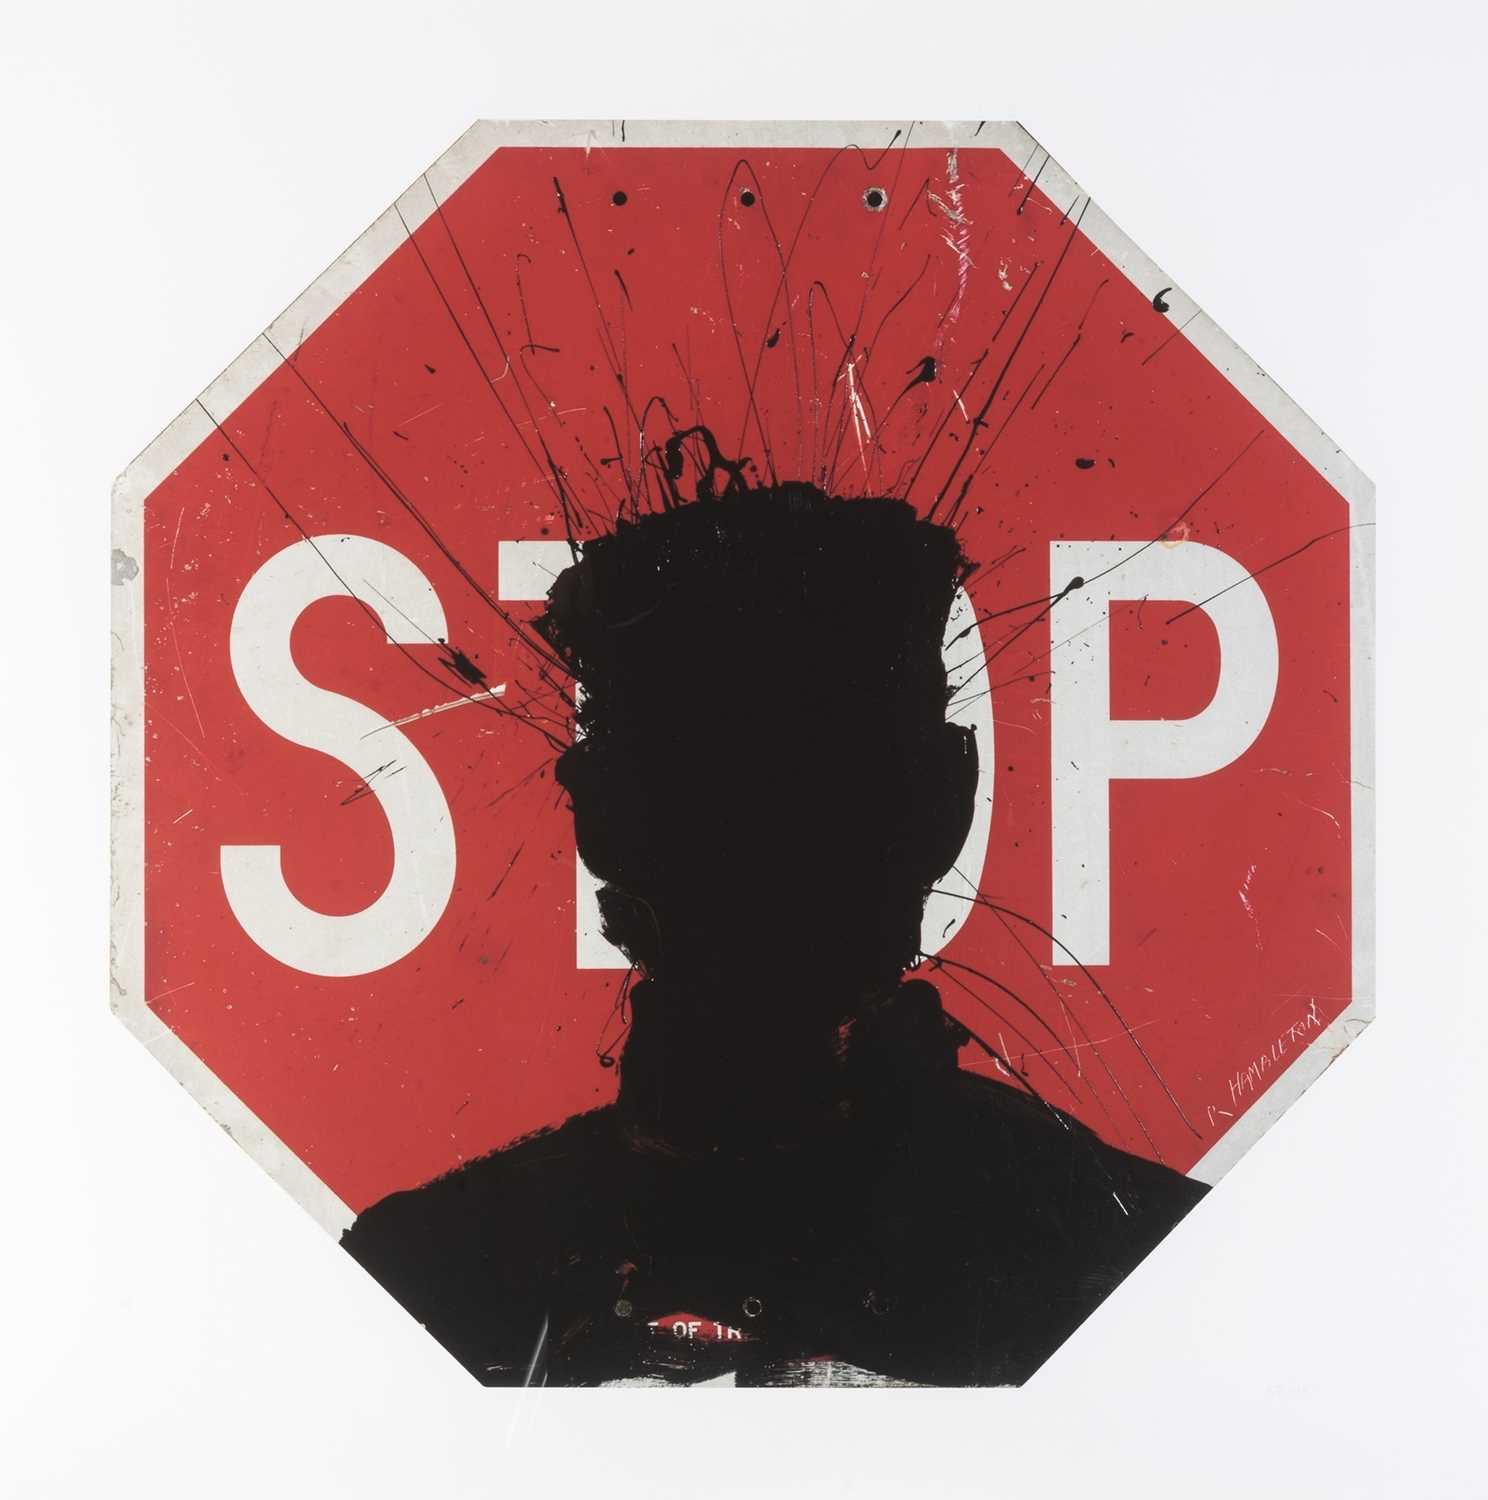 Lot 163 - Richard Hambleton (Canadian 1952-2017), 'Stop Sign', 2018